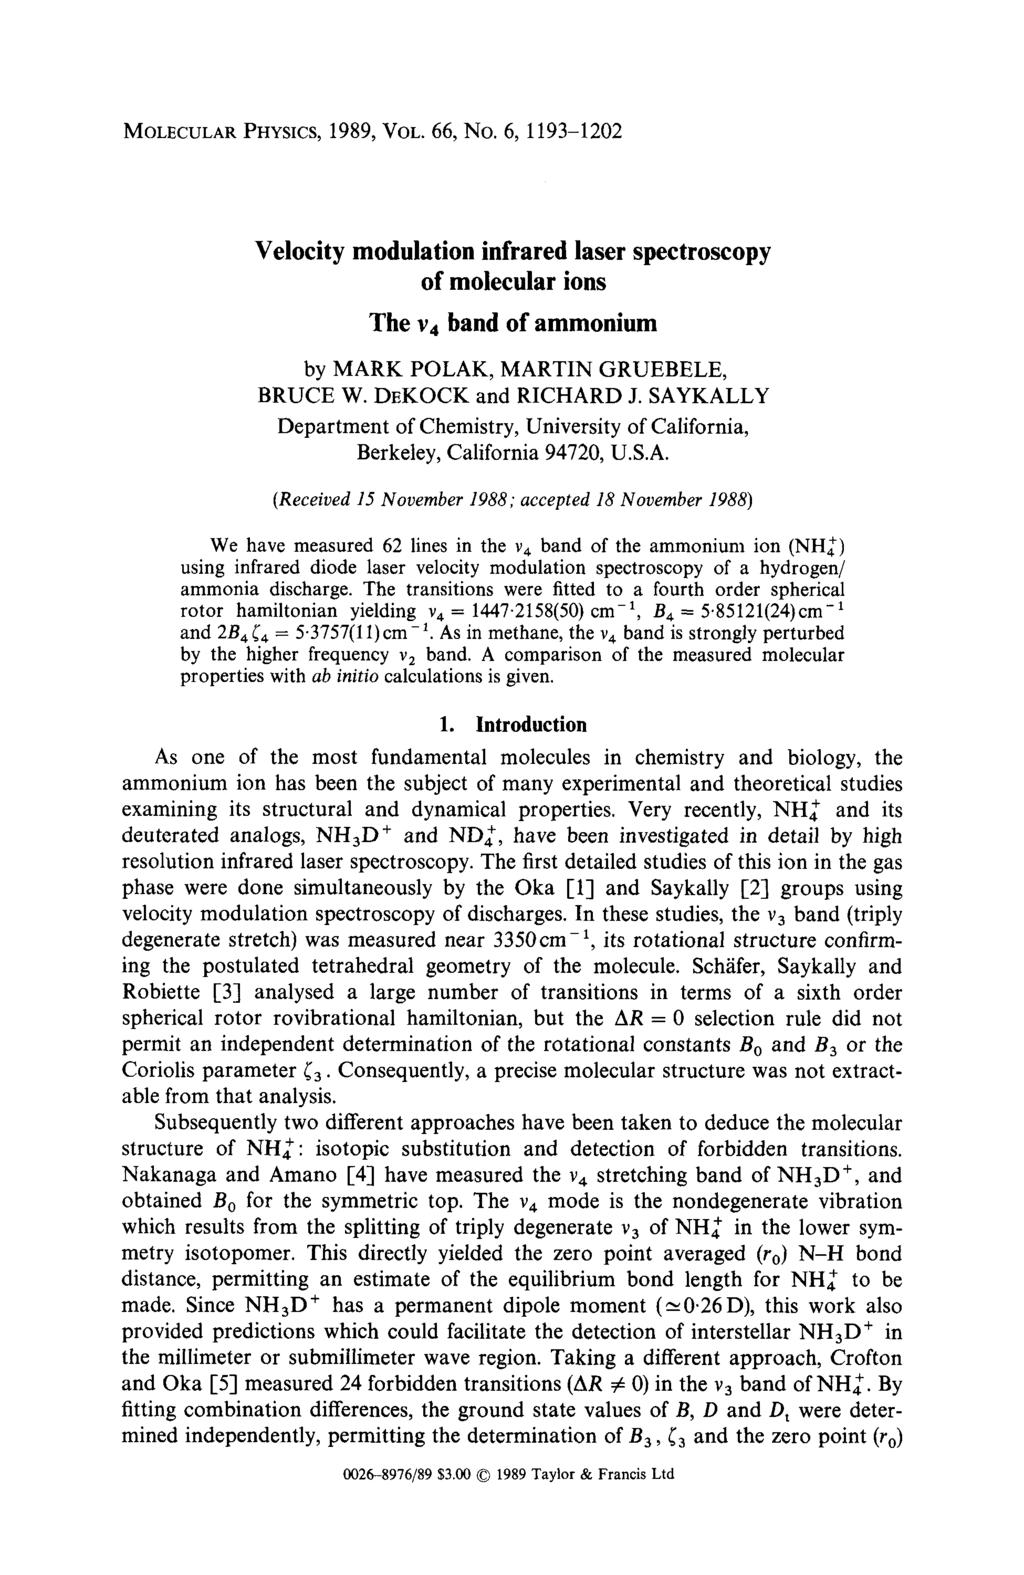 MOLECULAR PHYSICS, 1989, VOL. 66, No. 6, 1193-1202 Velocity modulation infrared laser spectroscopy of molecular ions The v4 band of ammonium by MARK POLAK, MARTIN GRUEBELE, BRUCE W.